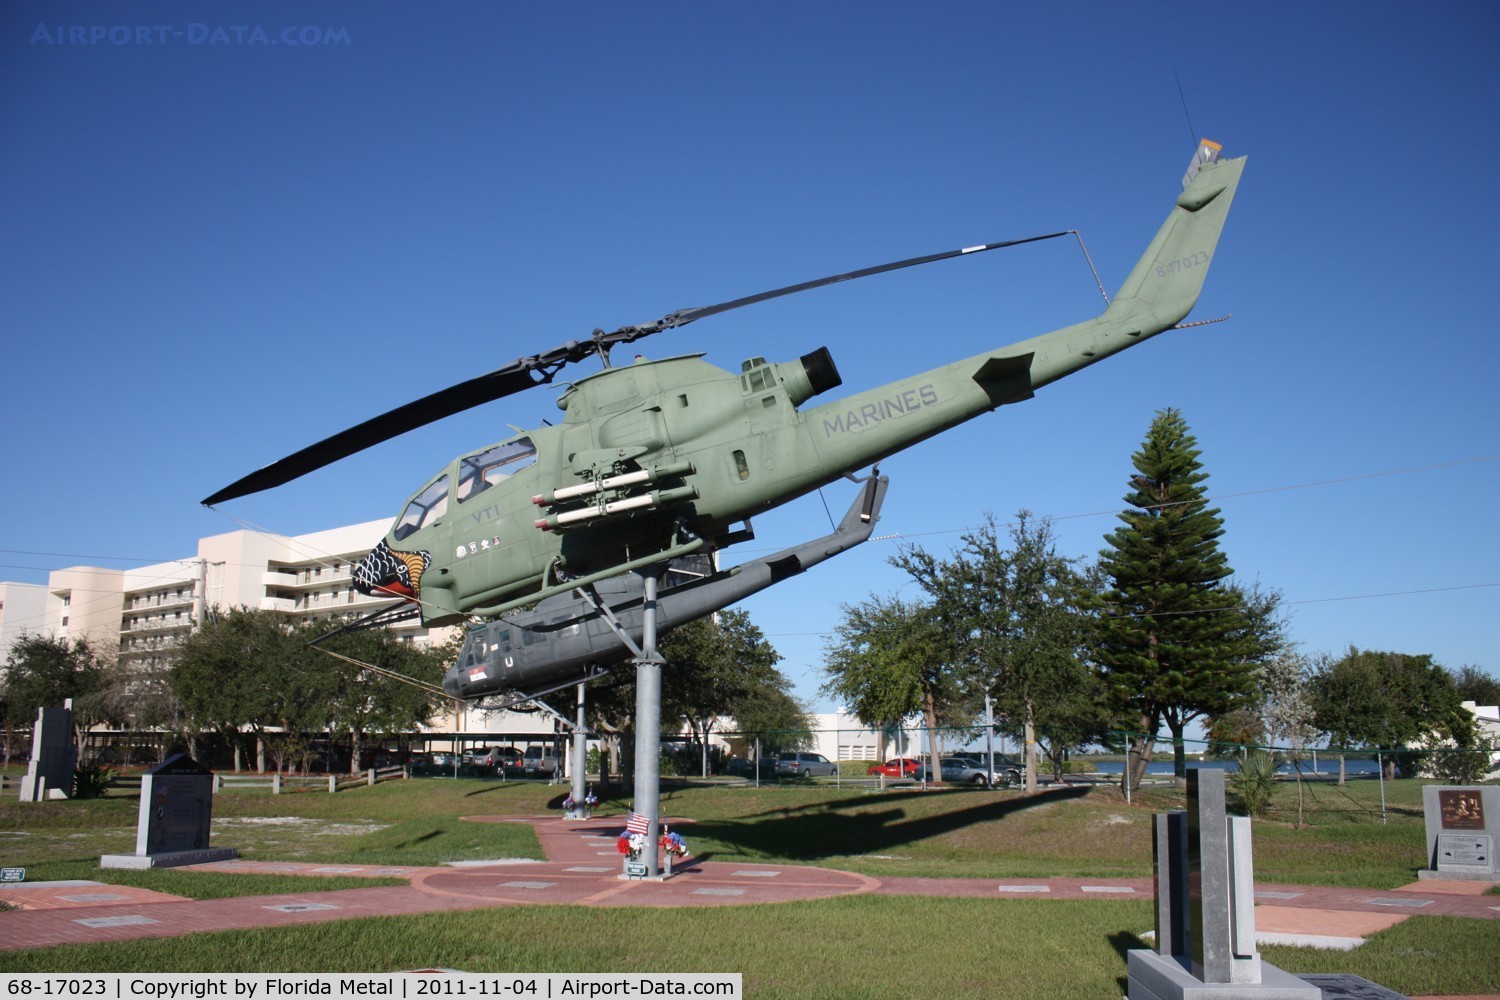 68-17023, 1968 Bell AH-1G Cobra C/N 20751, AH-1G Cobra on display at a Veterans Park in Cocoa Florida